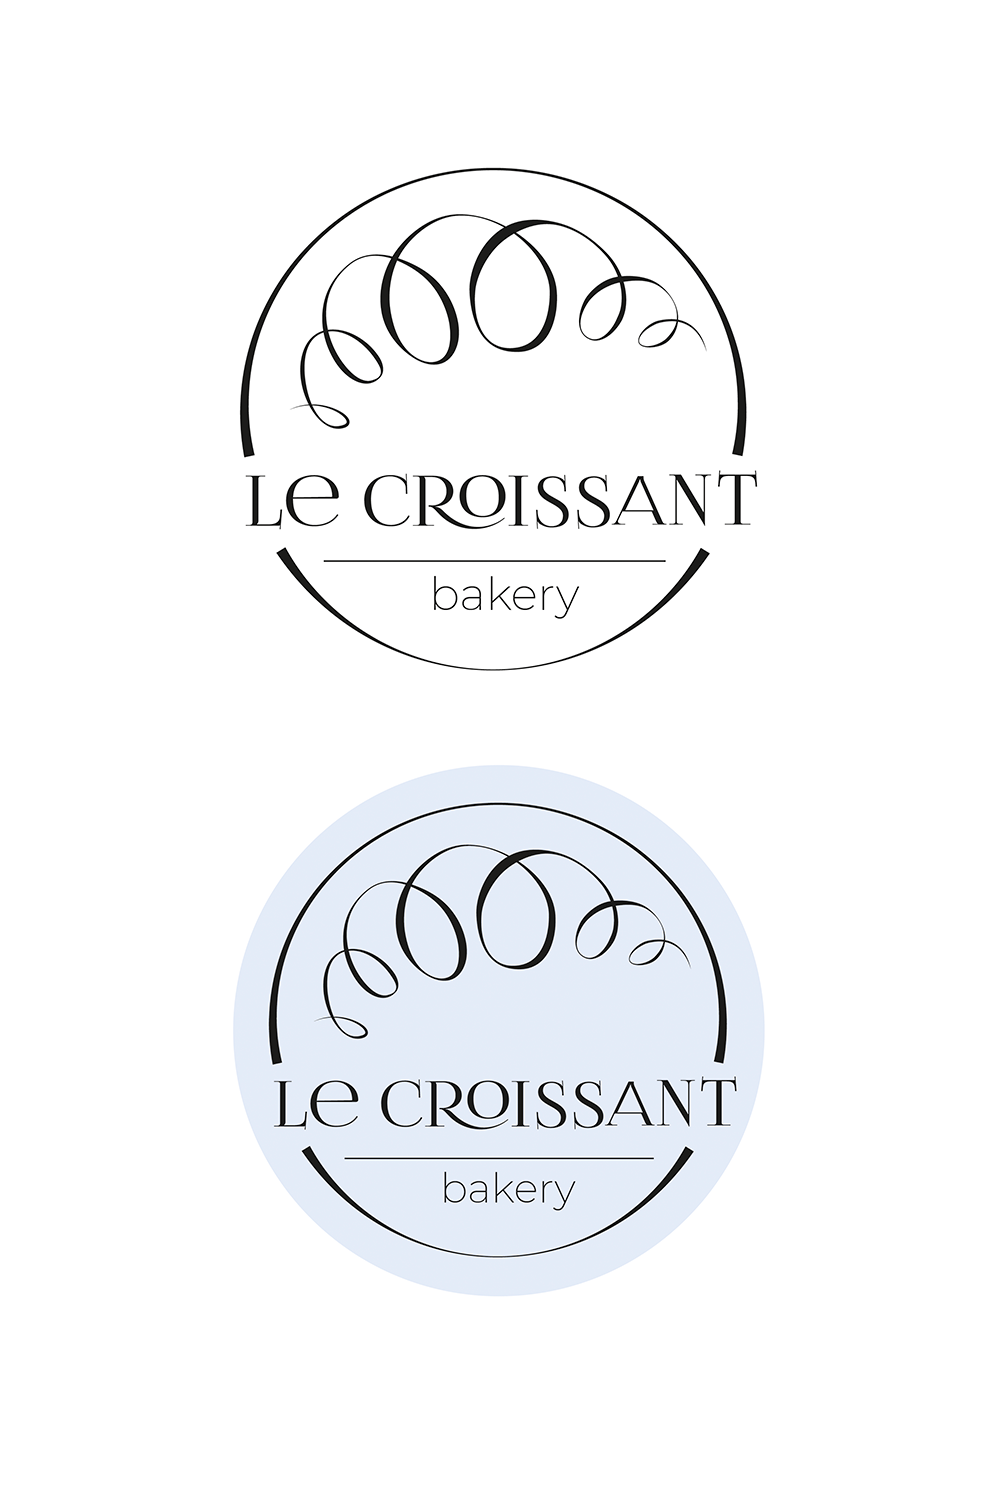 Bakery Logo pinterest image.